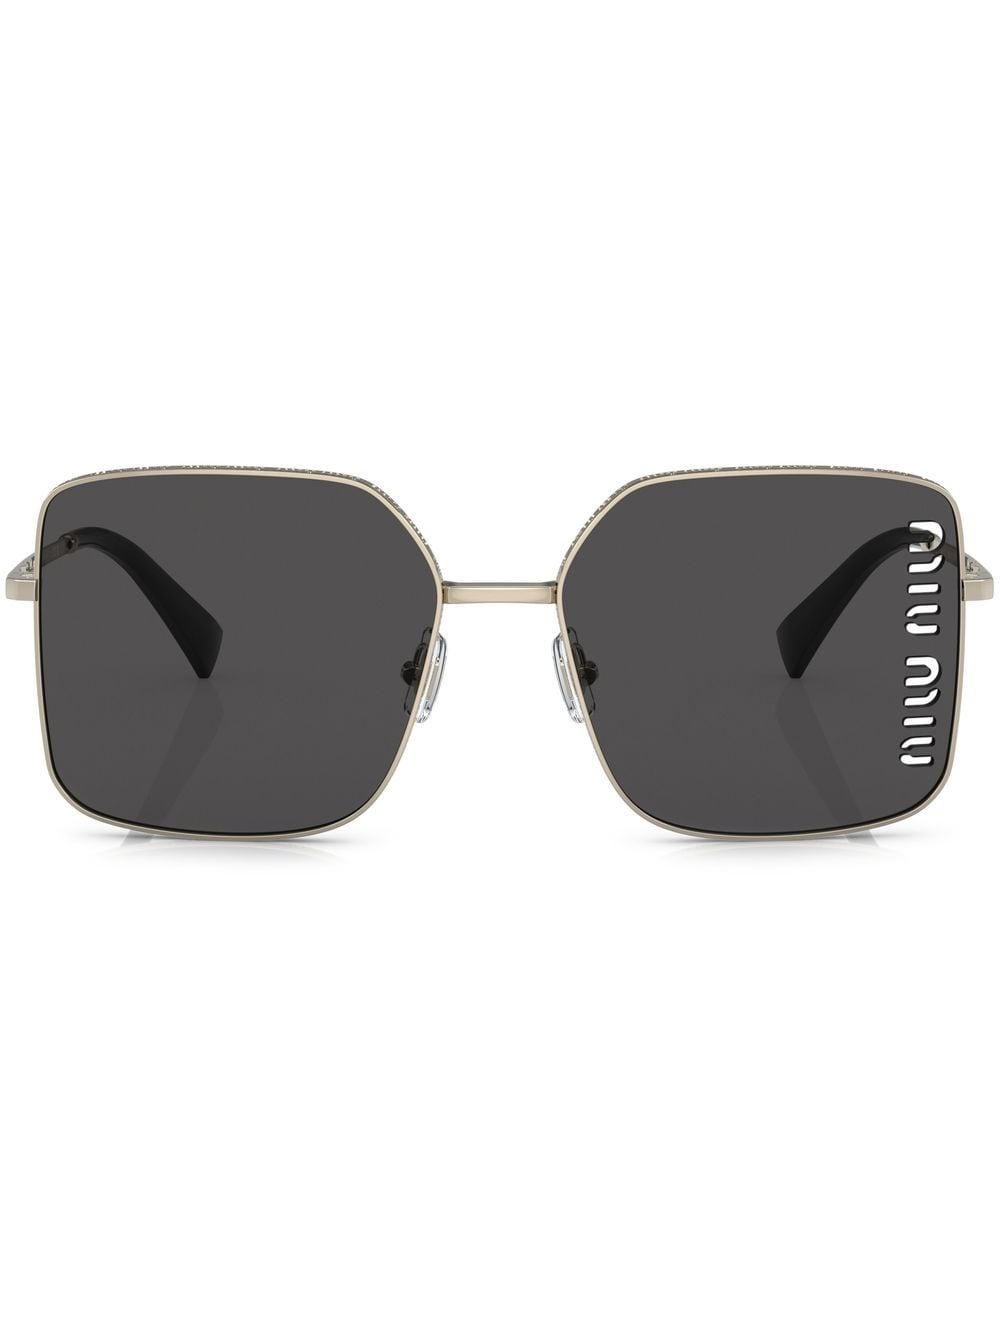 Miu Miu Eyewear Sonnenbrille mit Laser-Cuts - Gold von Miu Miu Eyewear